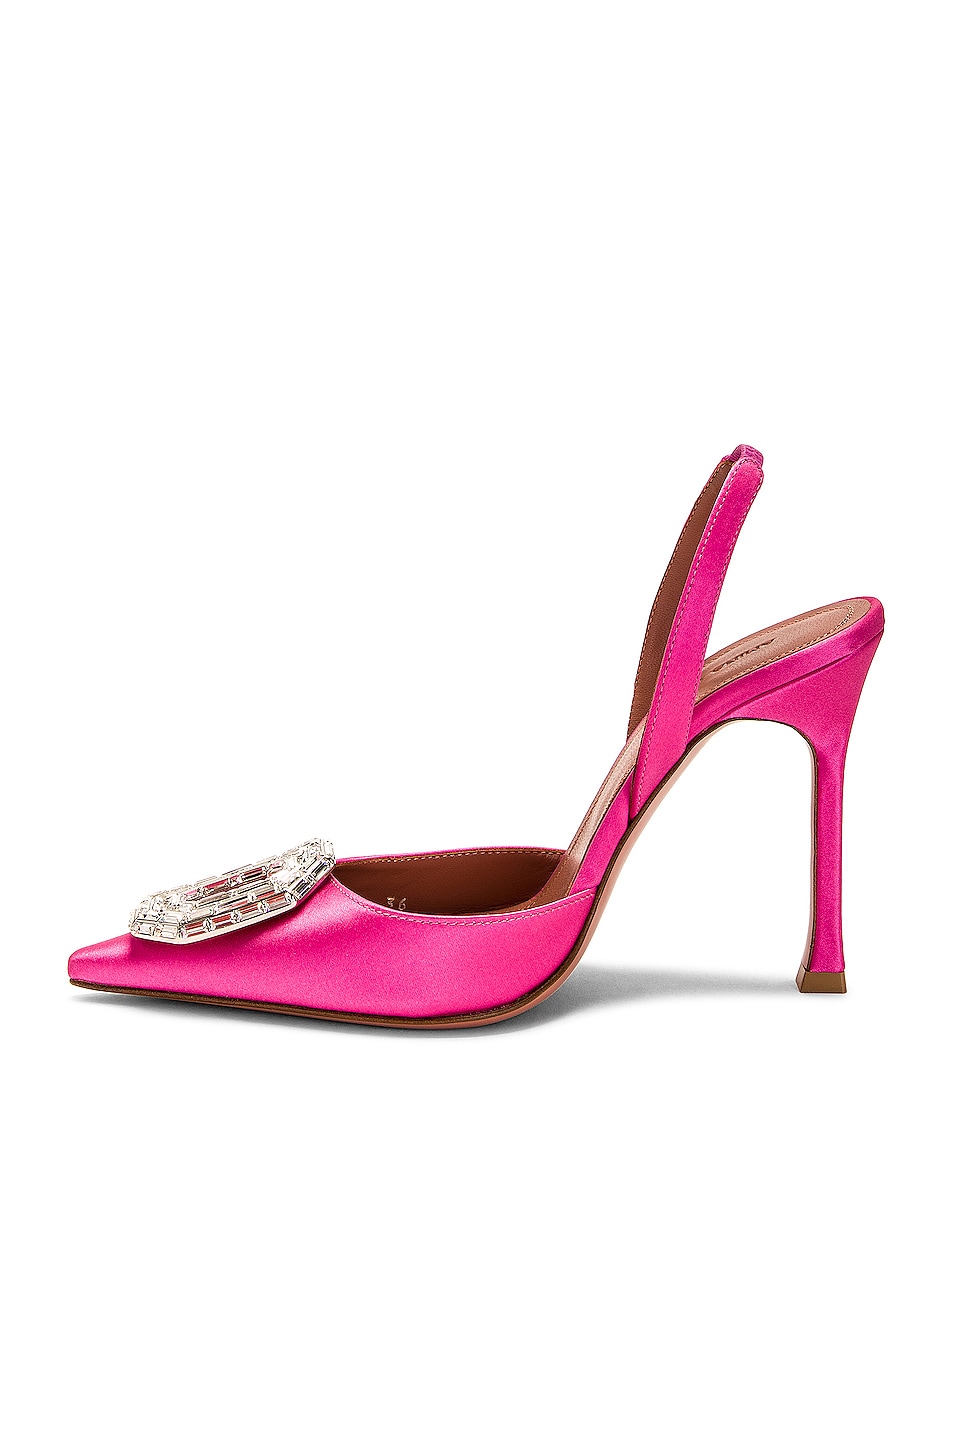 AMINA MUADDI Camelia Satin 105 Sling Heel in Pink | FWRD